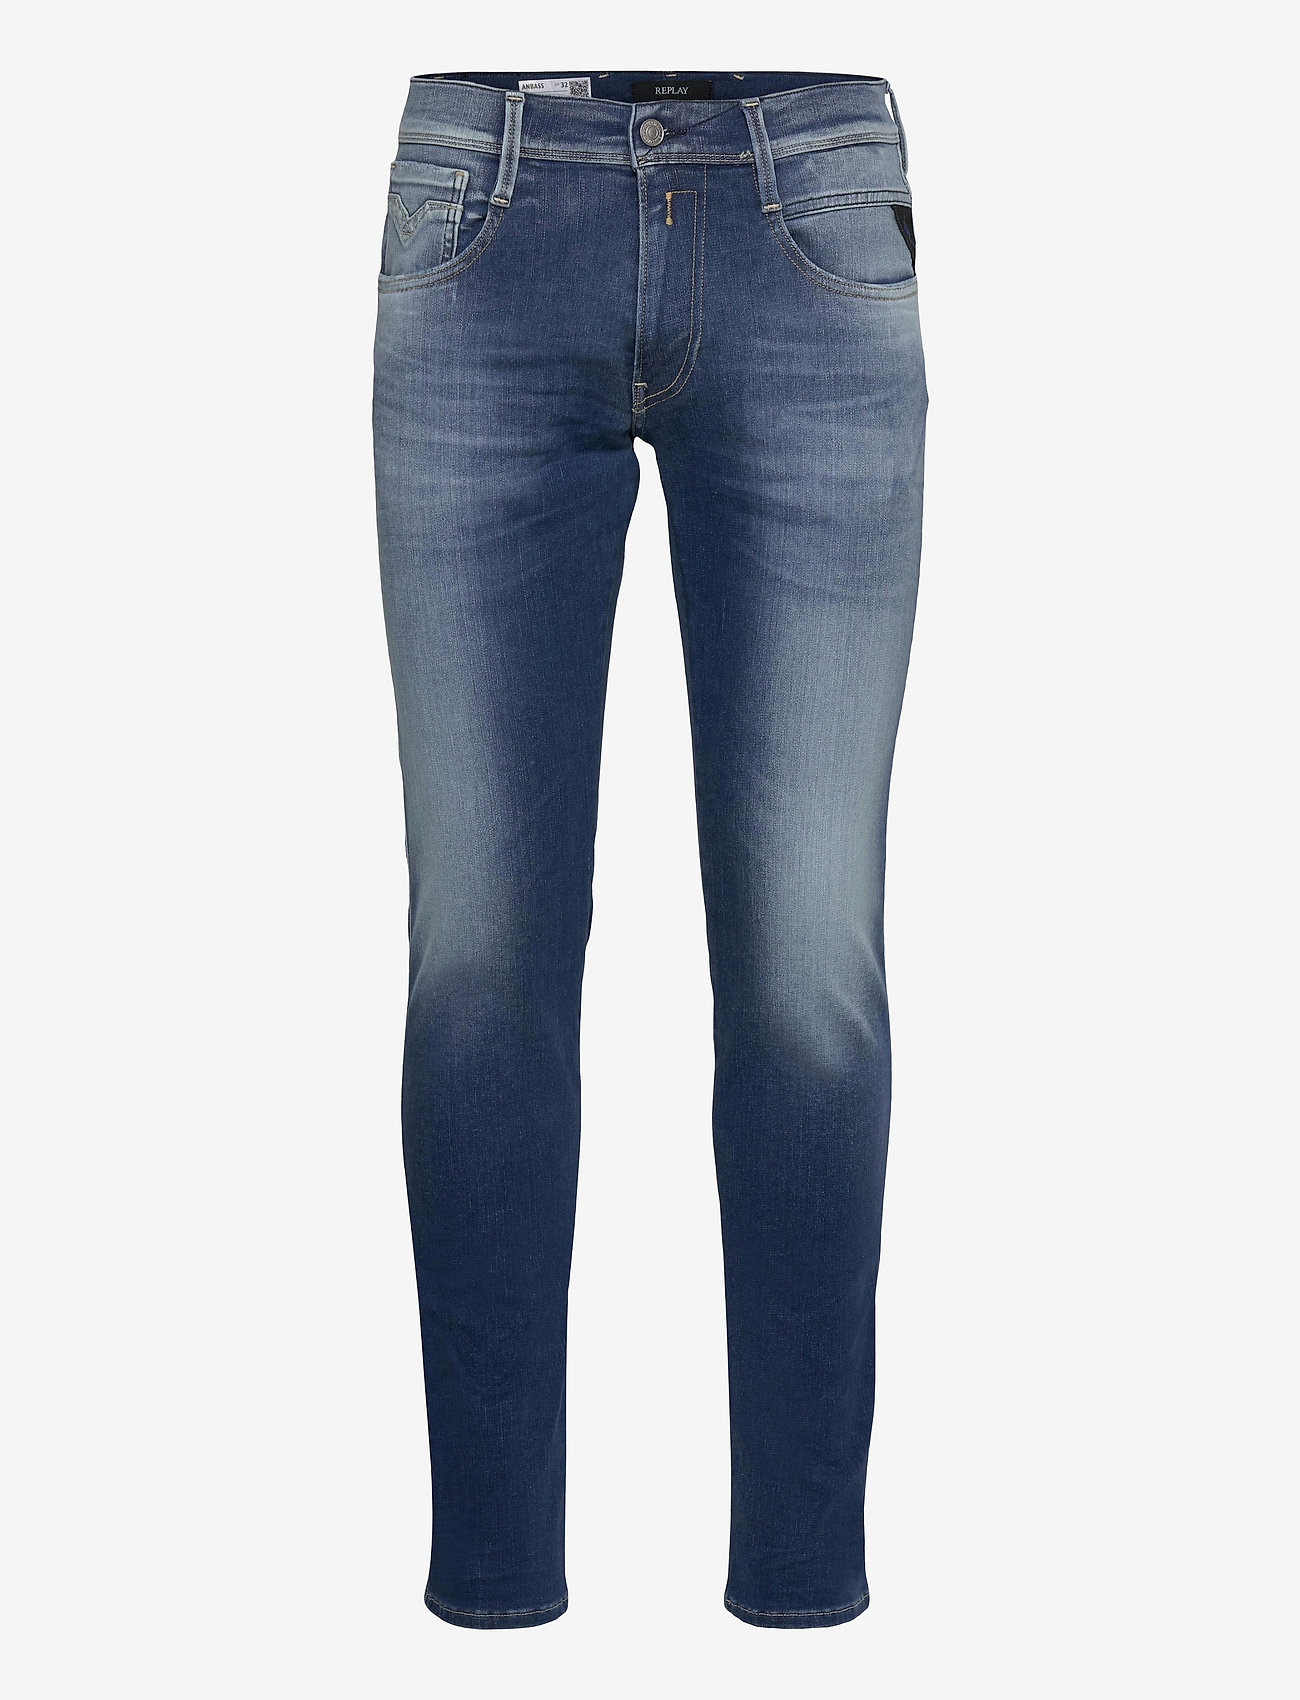 Replay - ANBASS Trousers Hyperflex Re-Used - slim jeans - medium blue - 0